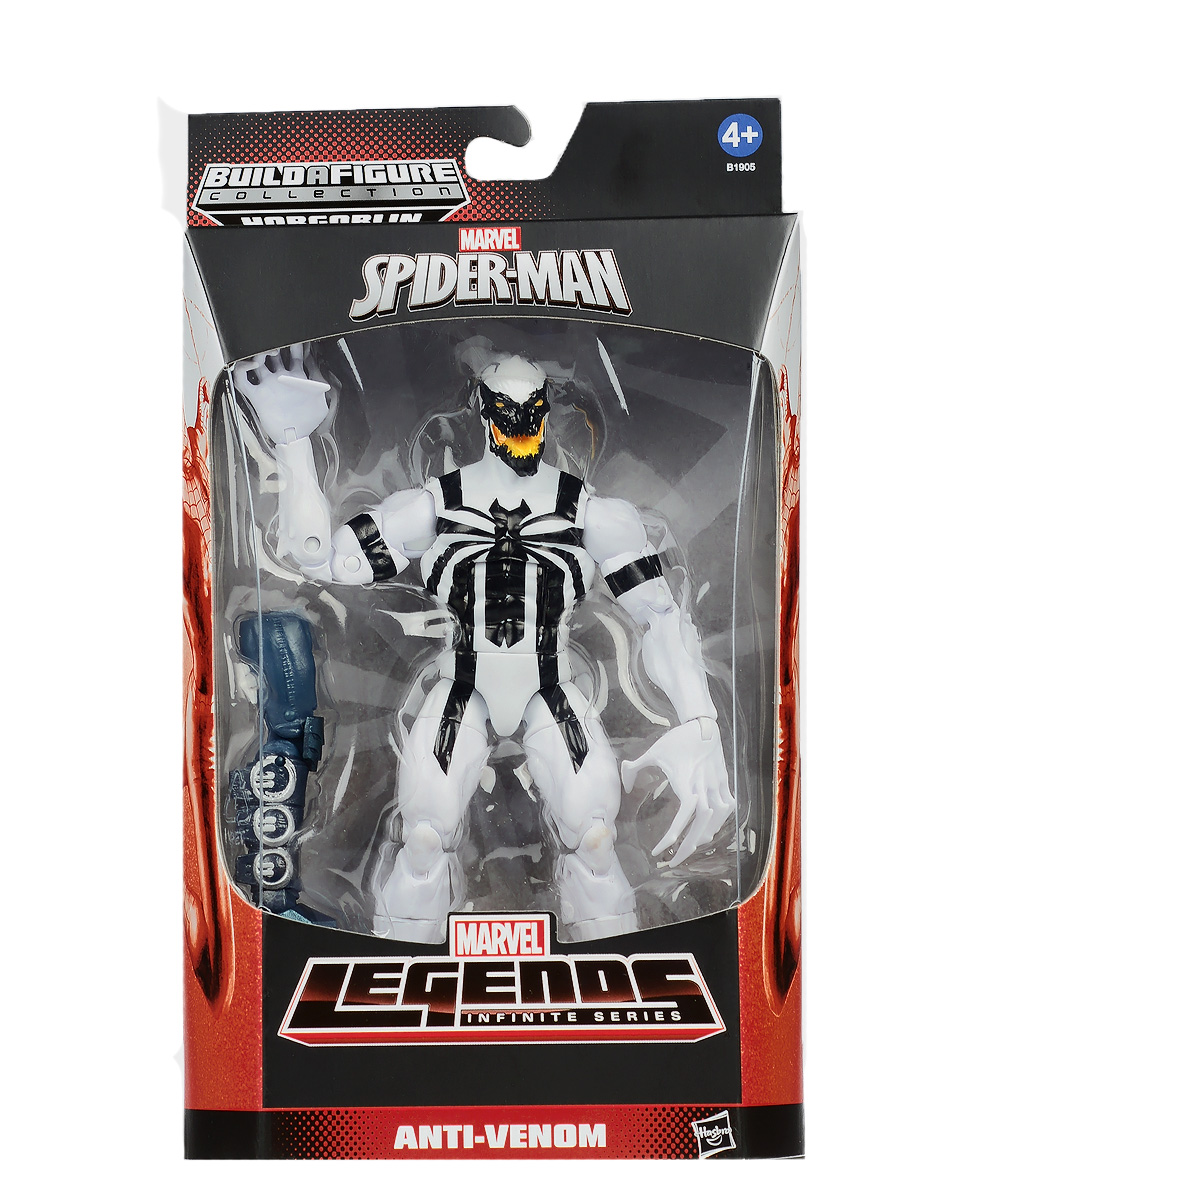  Spider-Man "Legends: Anti-Venom", 15 . A6655EU4_A1905